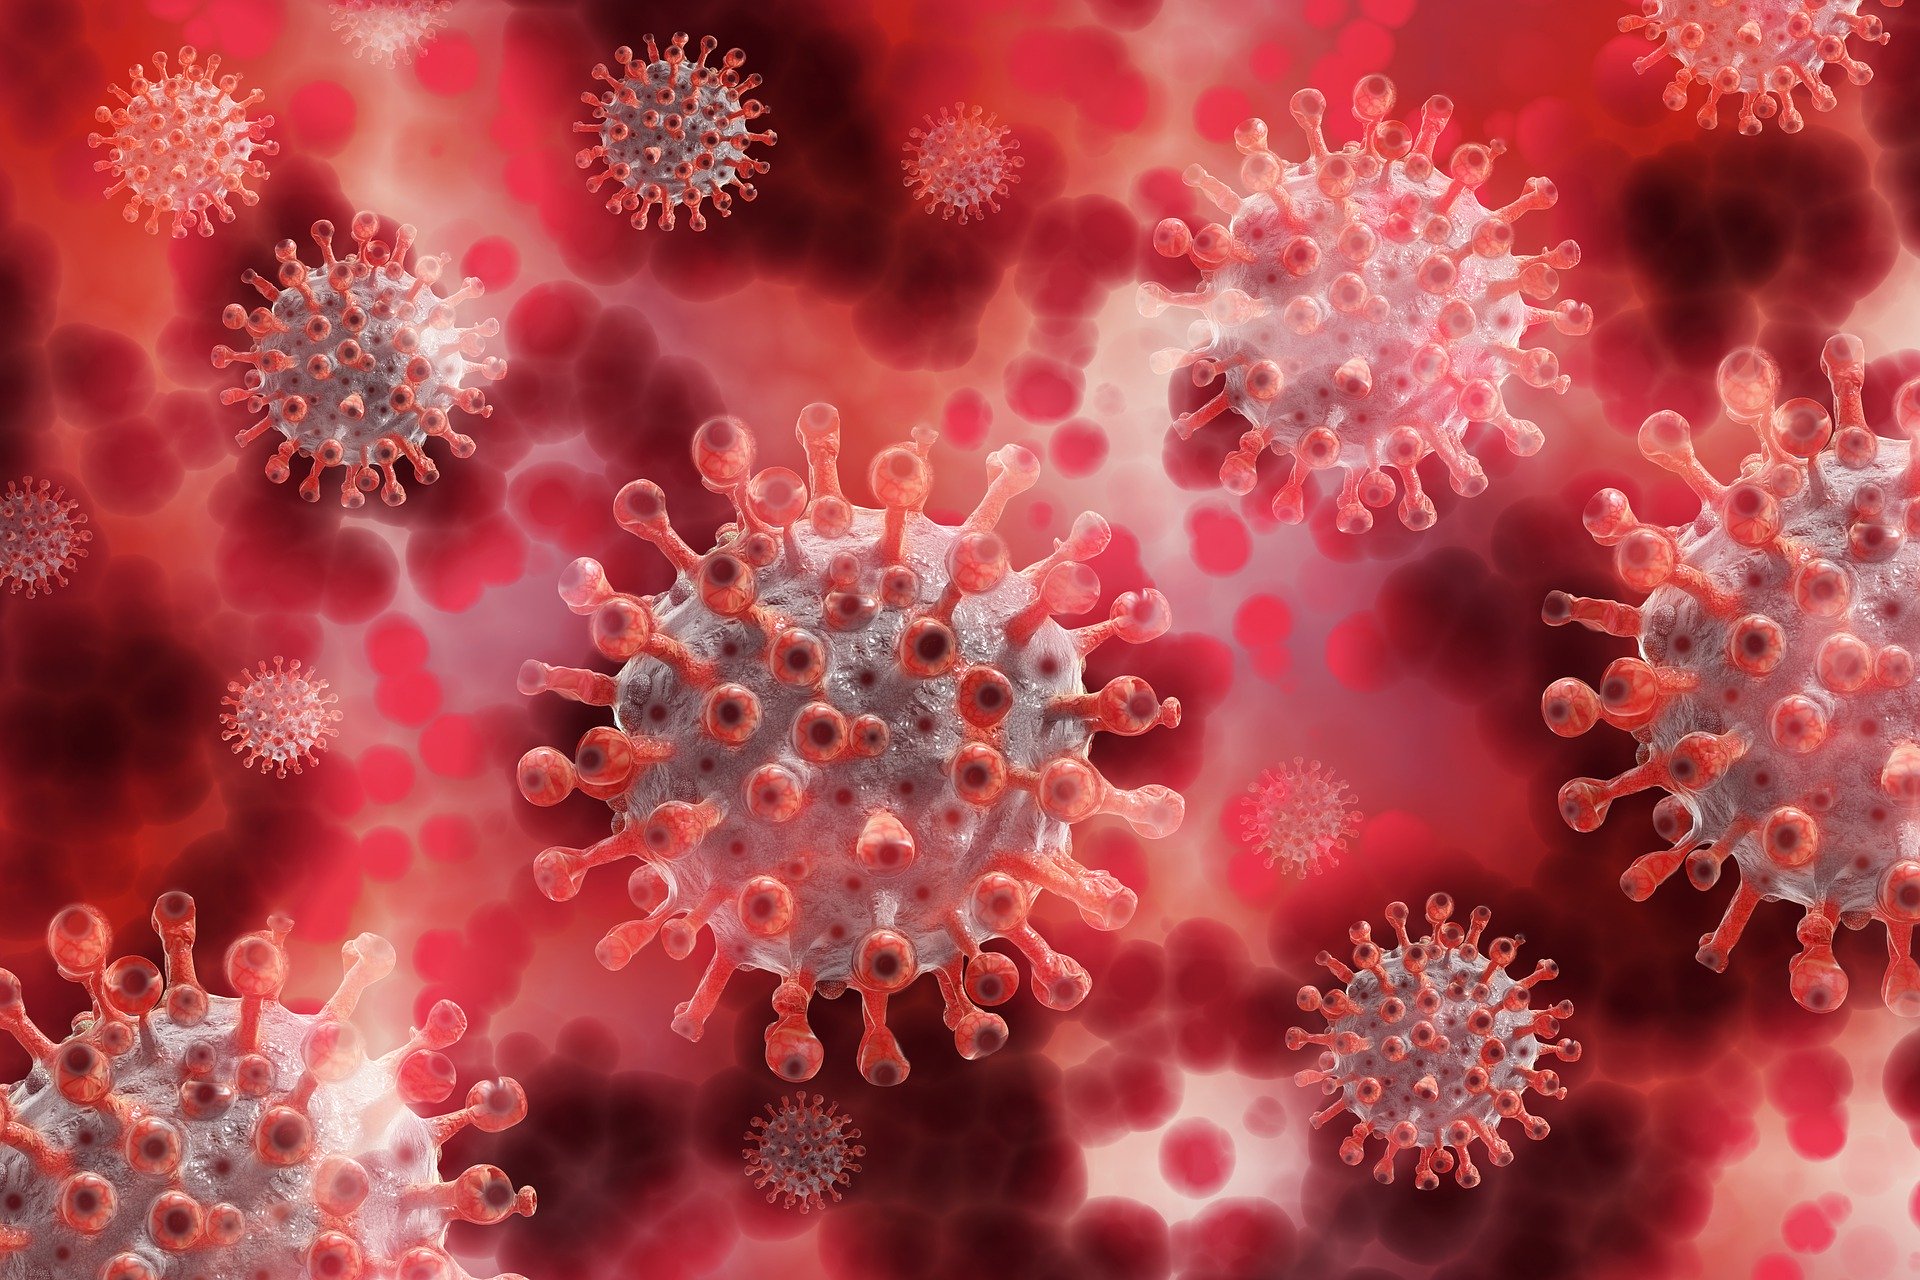 Coronavirus: in Toscana 632 nuovi positivi; 18 i decessi